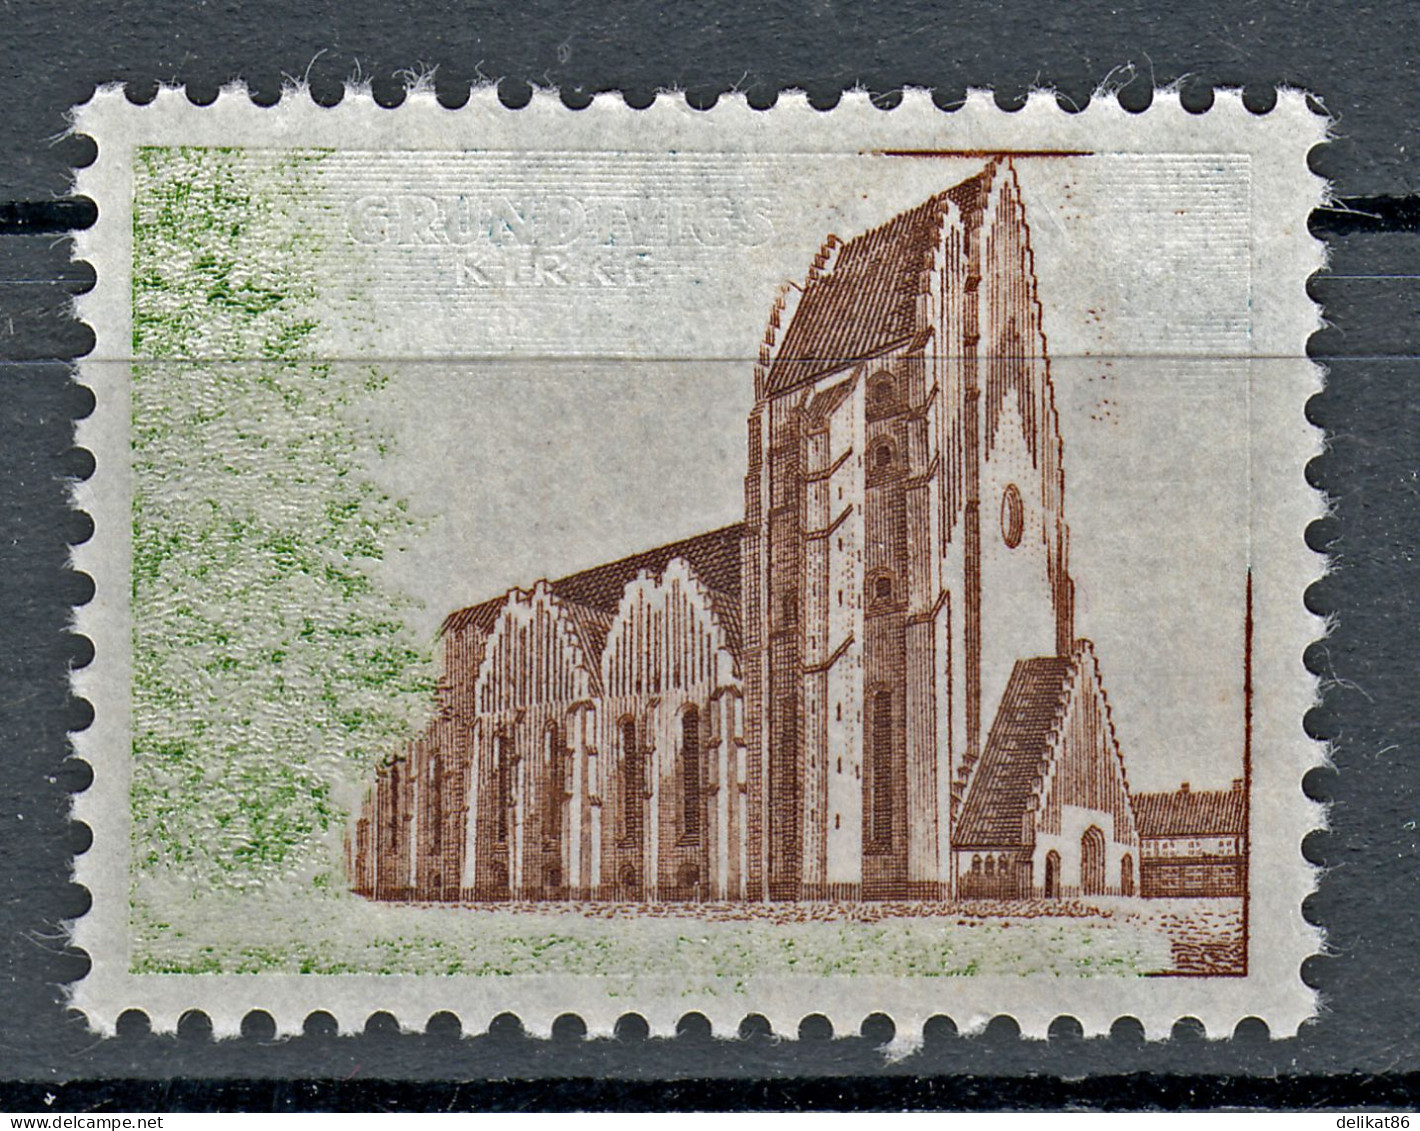 Probedruck Test Stamp Specimen Prøve Grundtvig Kirke Slania 1968 - Prove E Ristampe